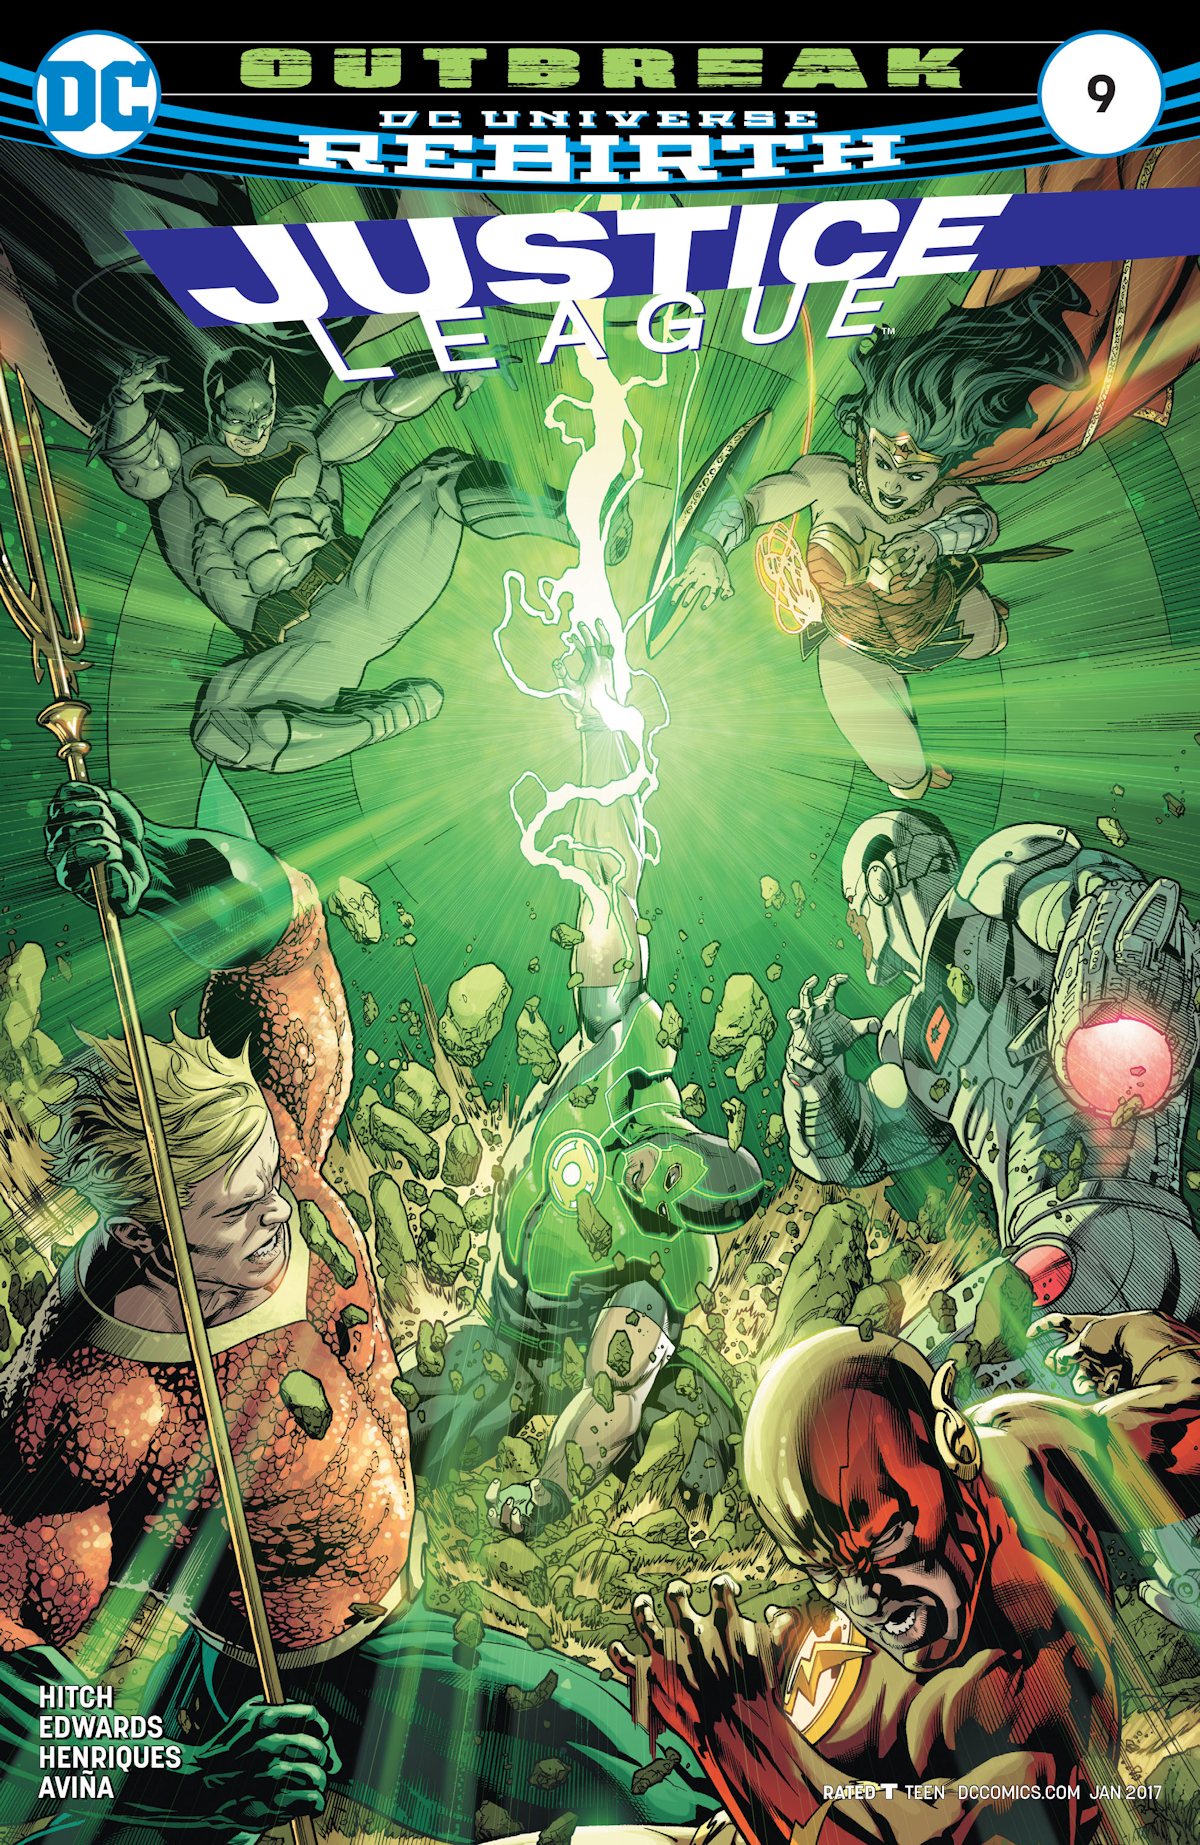 Justice League Vol. 3 9 (Cover A)